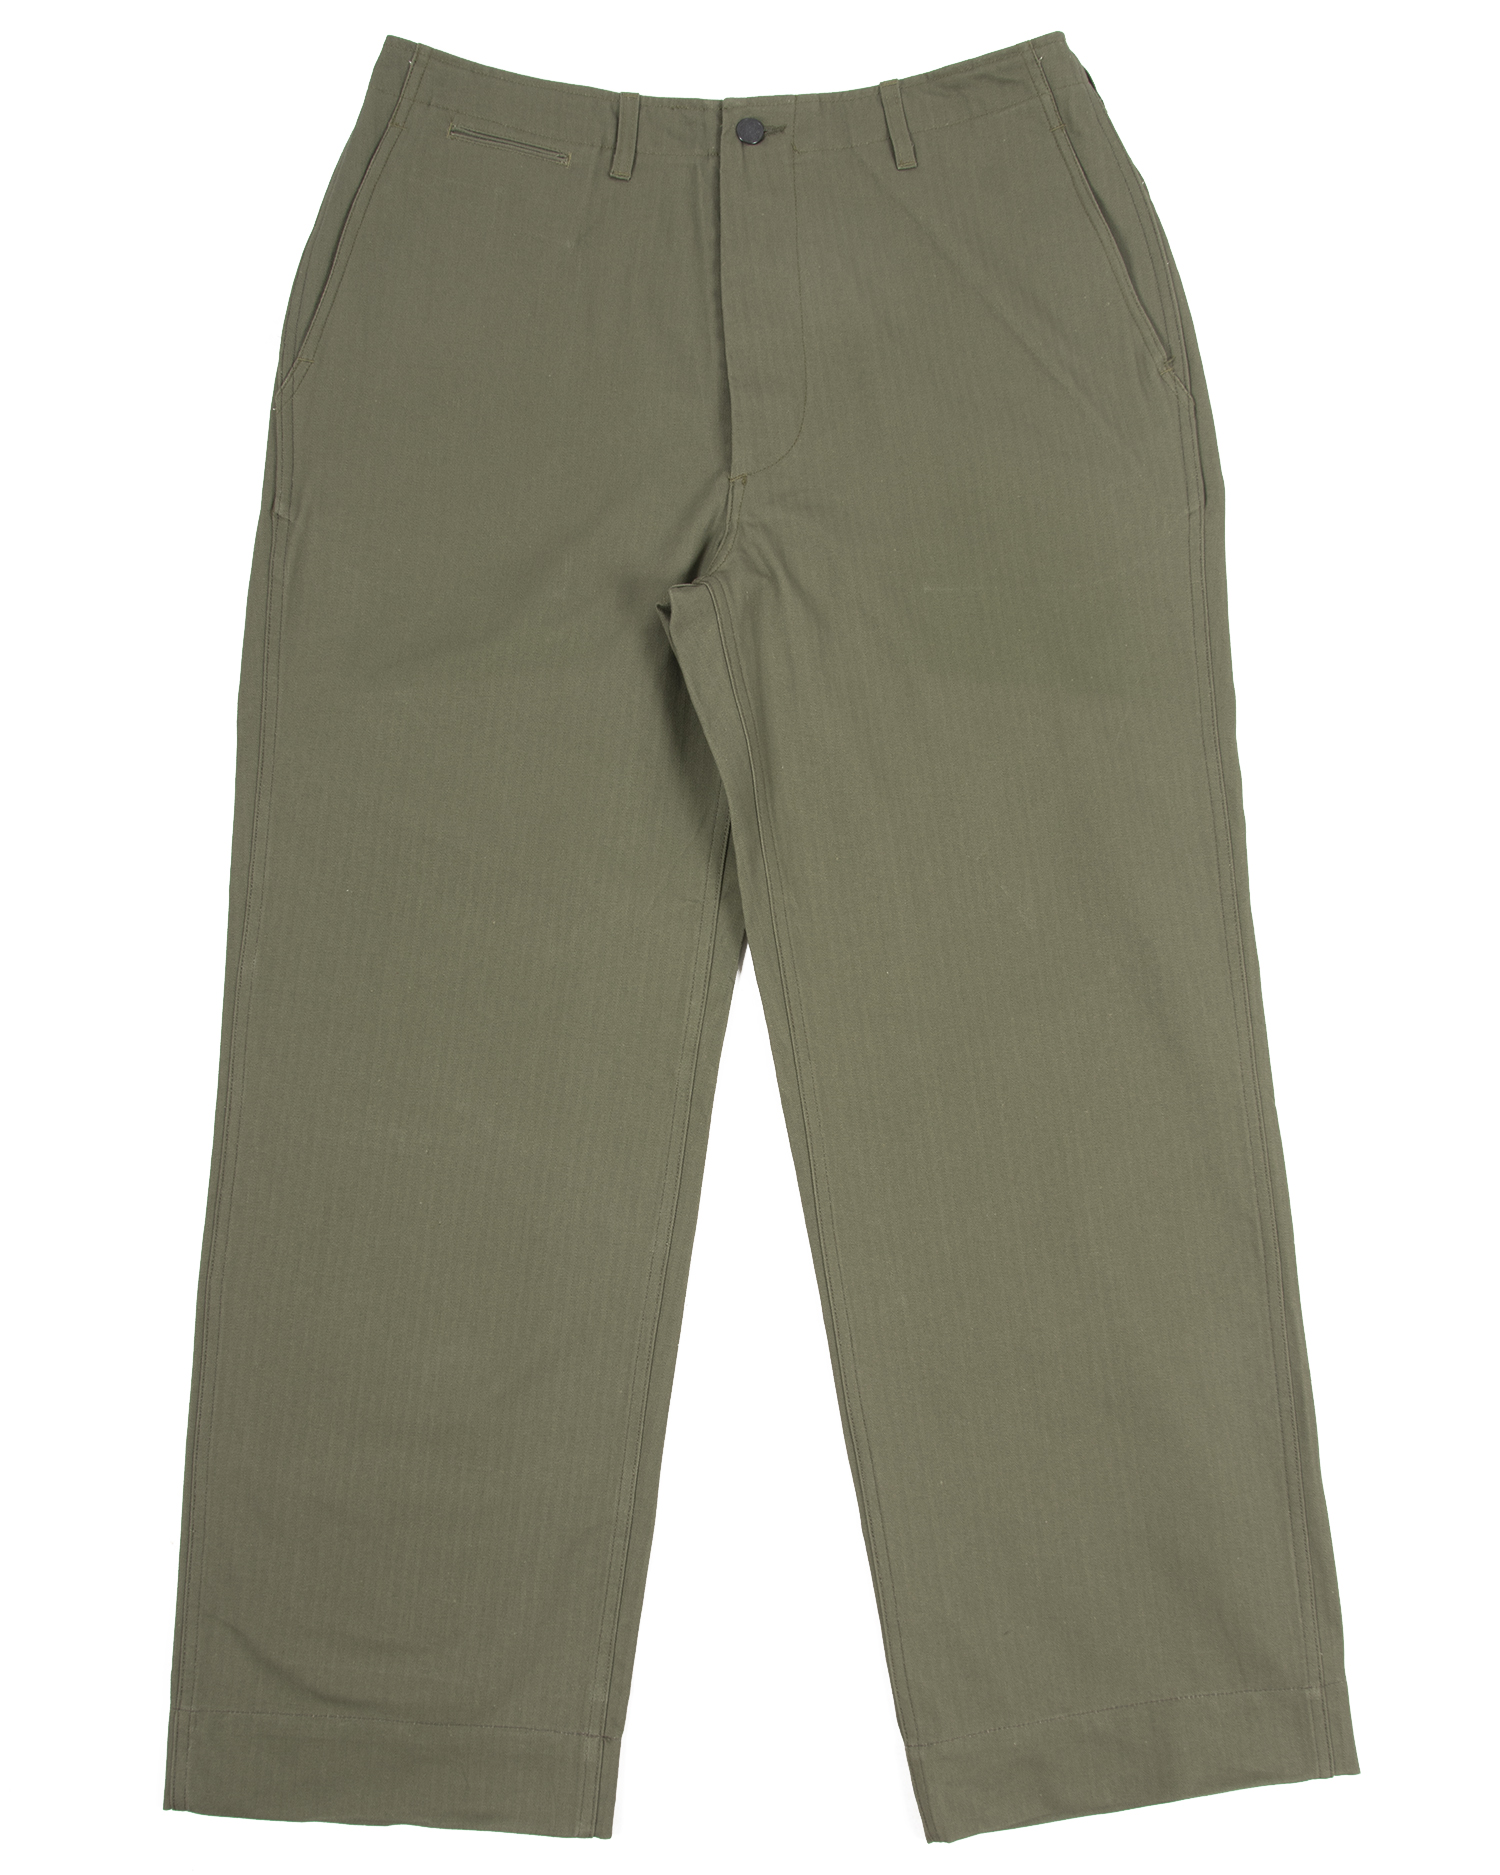 US WW2 1st Model HBT Trousers